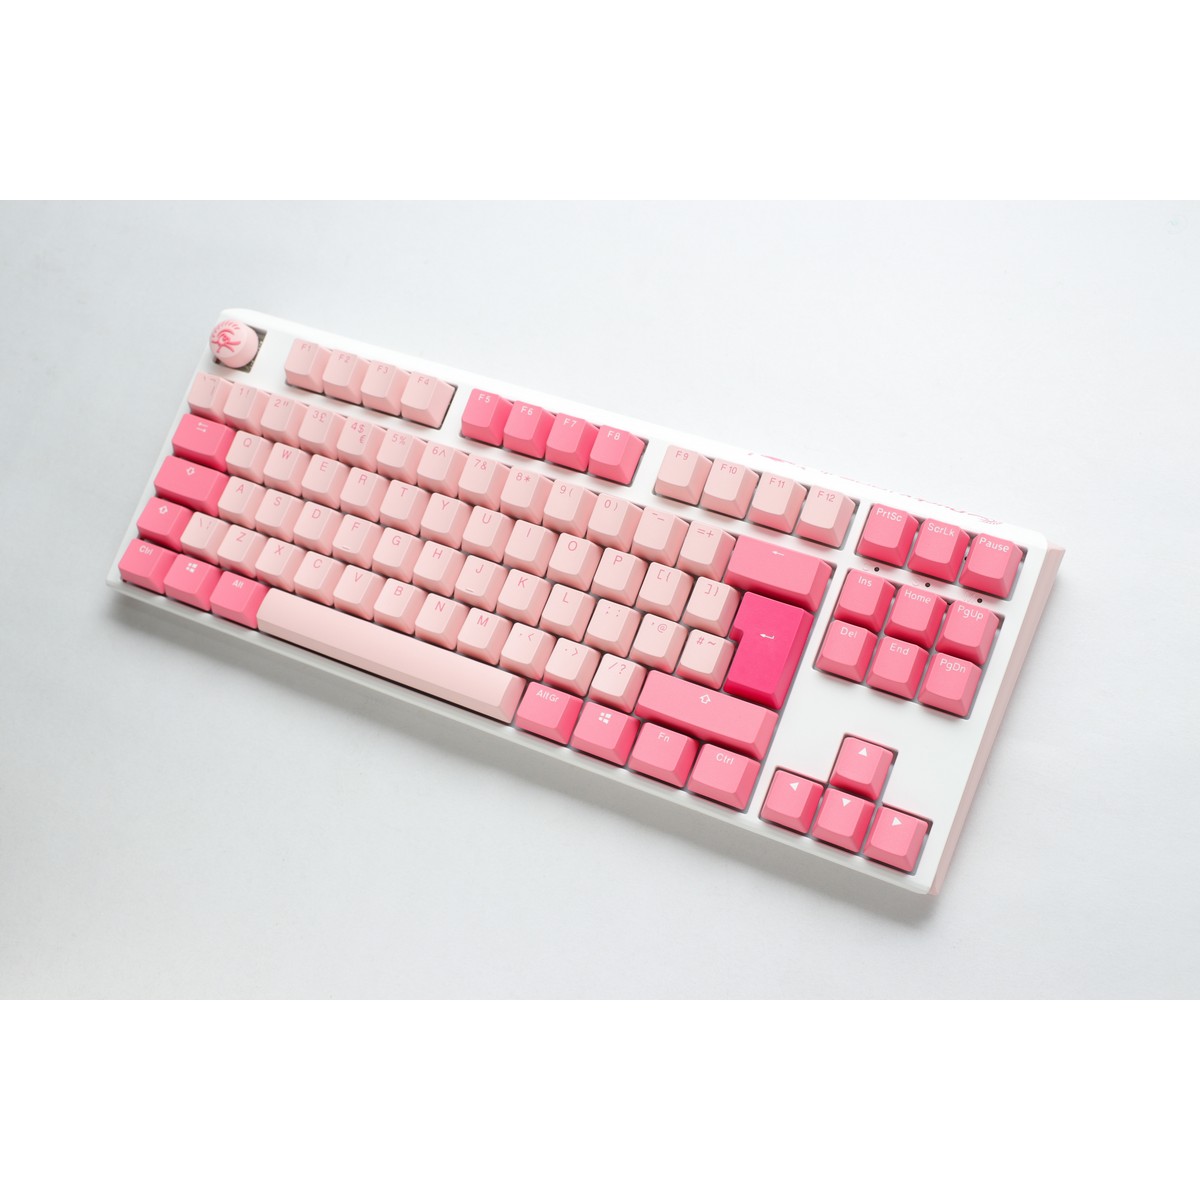 Ducky - Ducky One 3 Gossamer Pink TKL 80% USB Cherry MX Brown Mechanical Gaming Keyboard